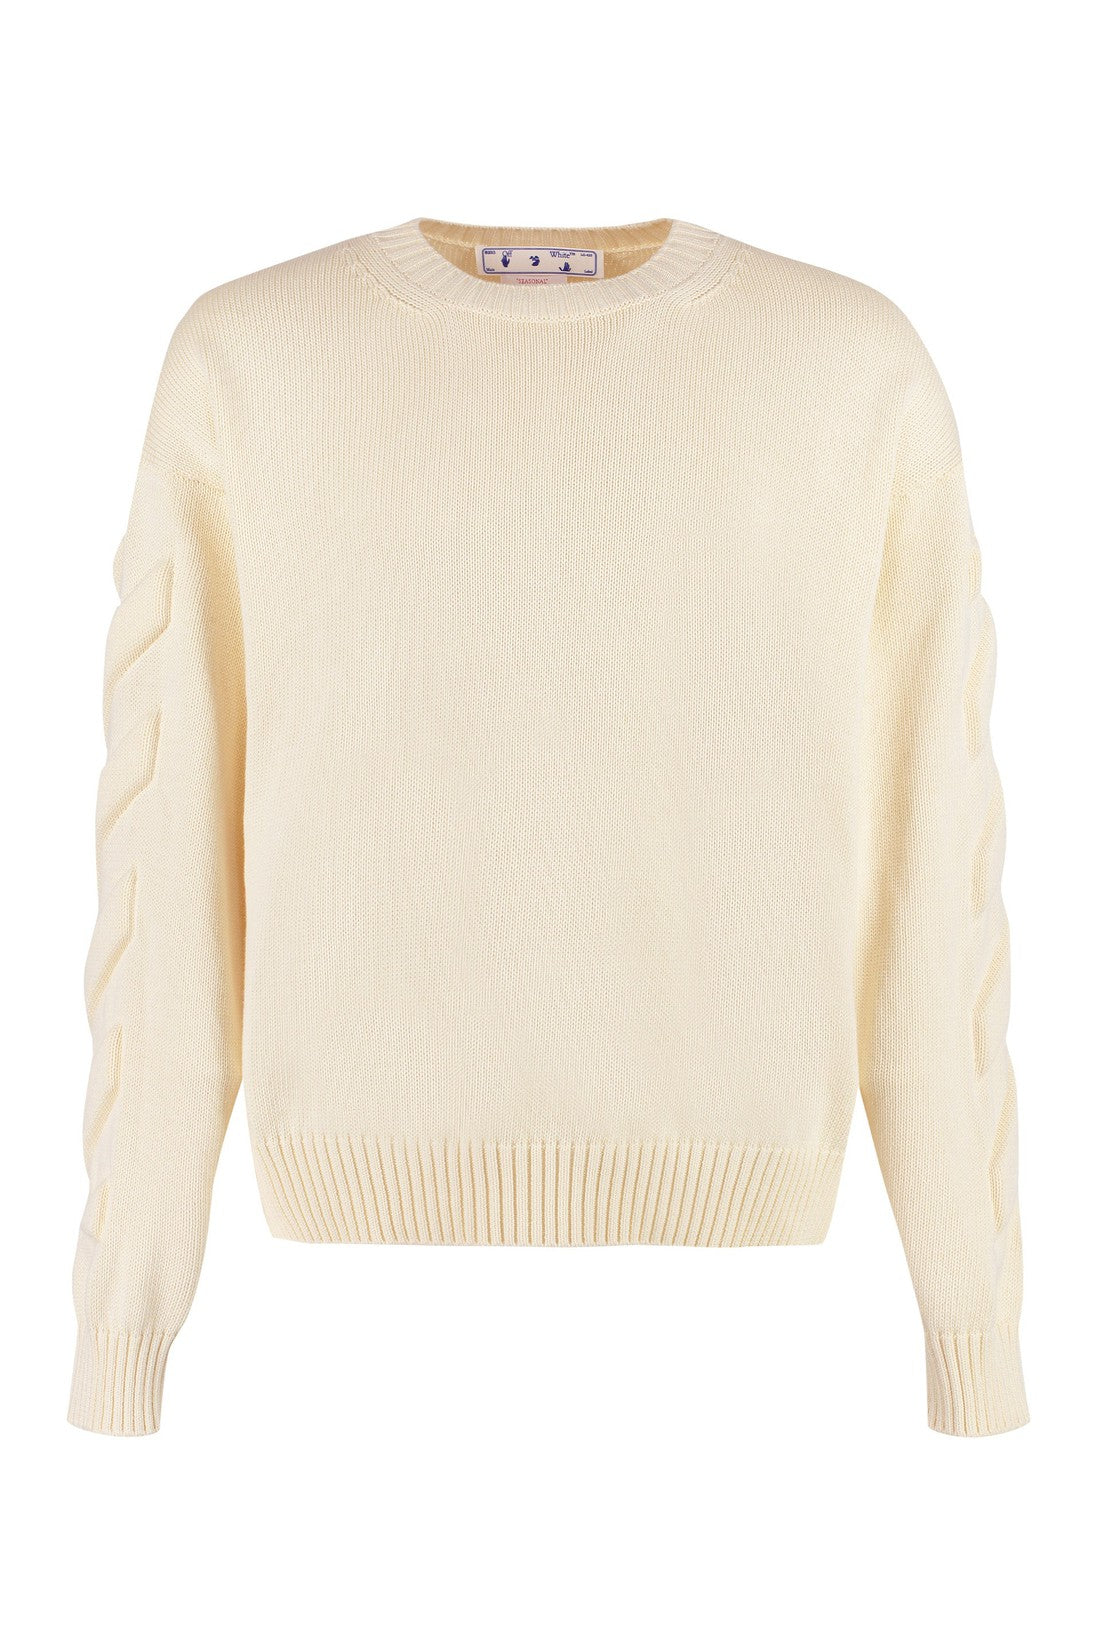 Off-White-OUTLET-SALE-Cotton crew-neck sweater-ARCHIVIST